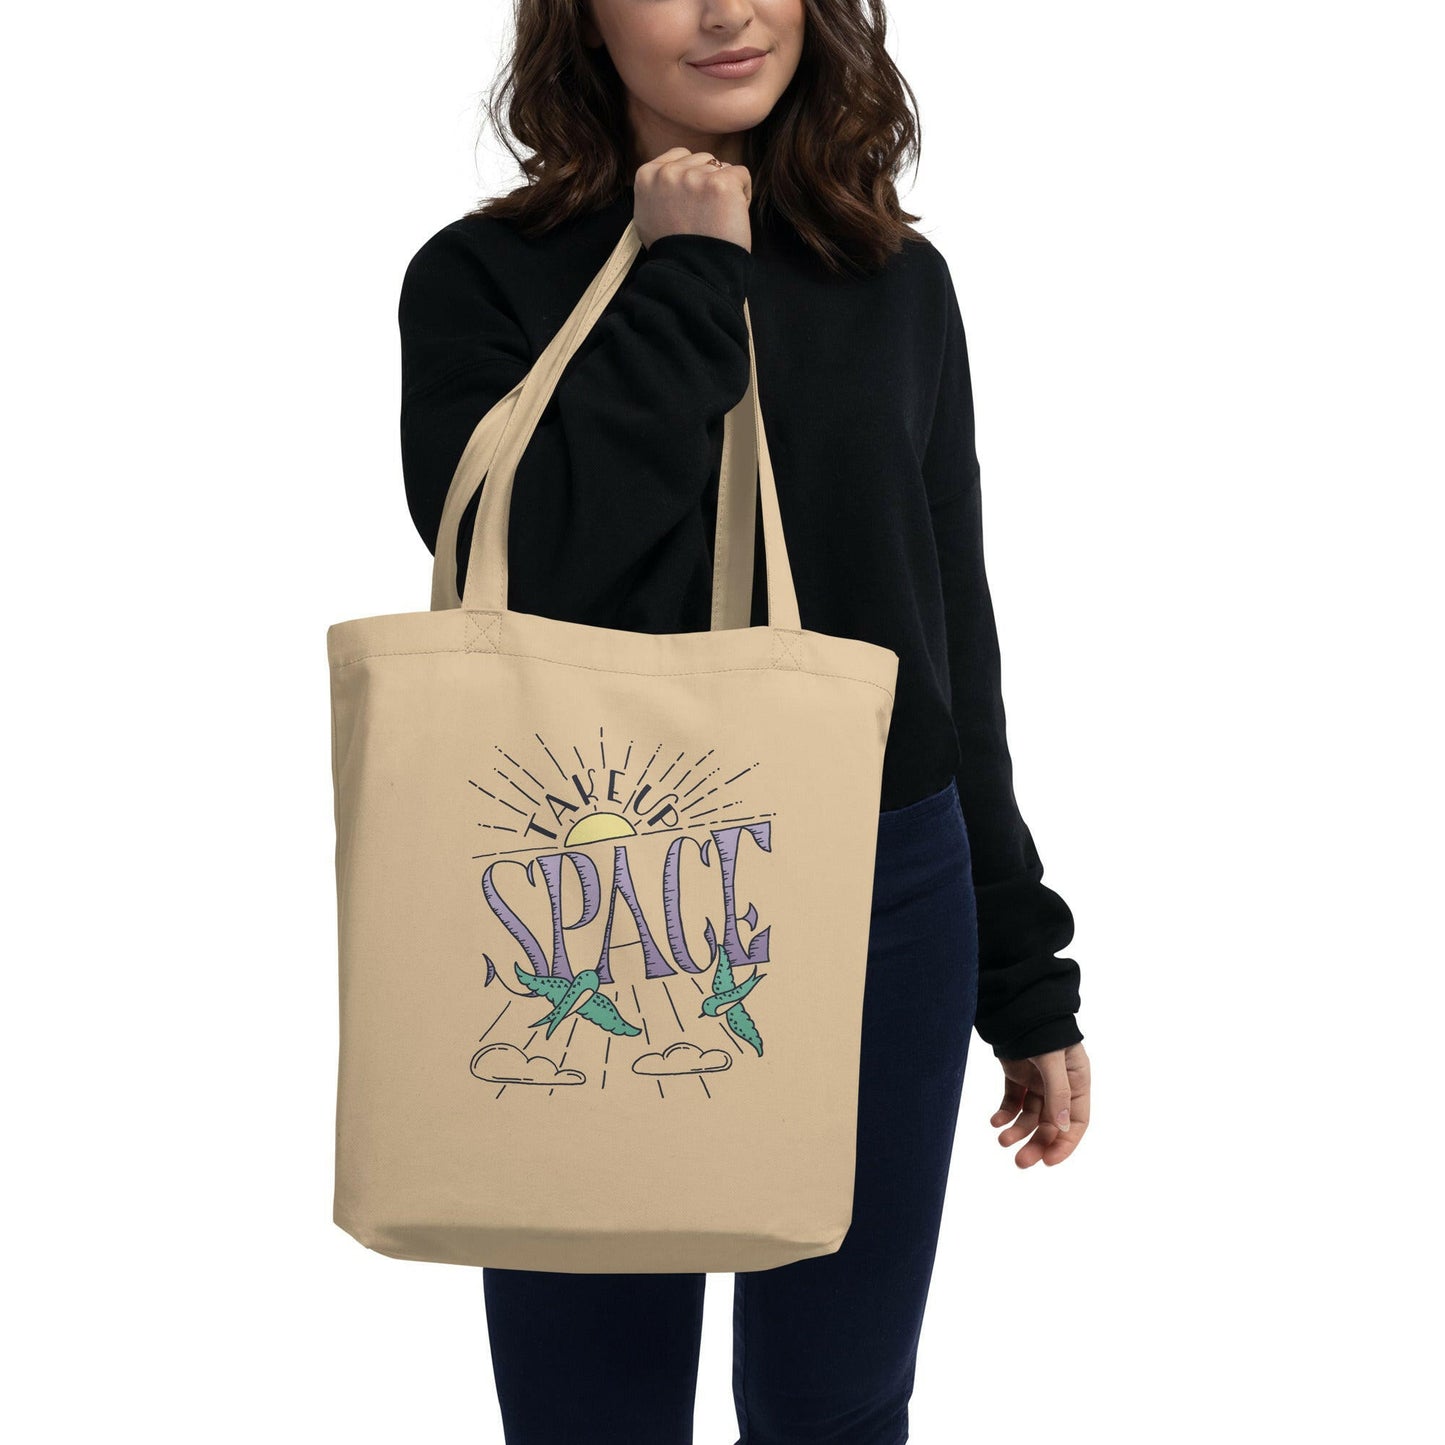 Take Up Space | Eco Tote Bag